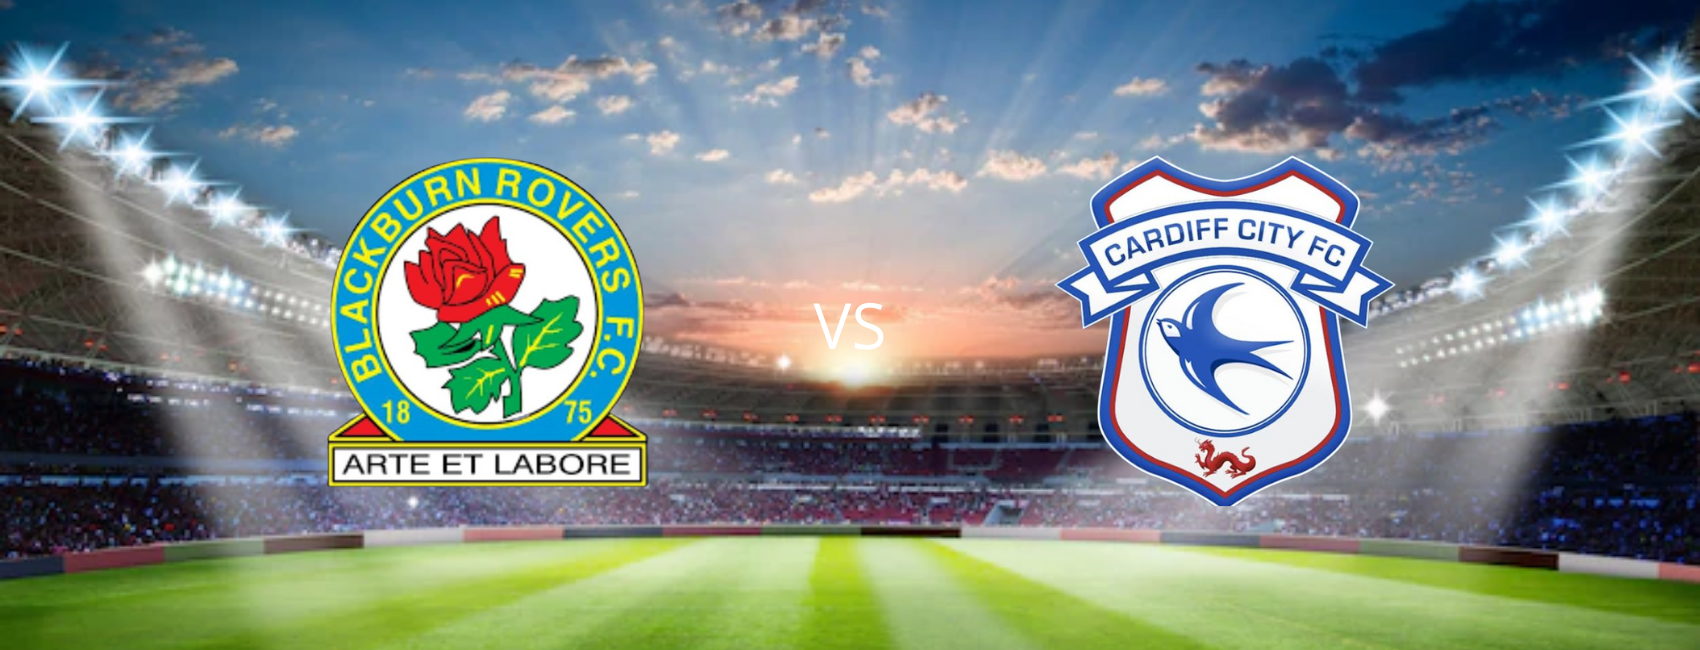 Blackburn Rovers FC vs Cardiff City FC Carabao Cup Tickets on sale now |  Ticombo